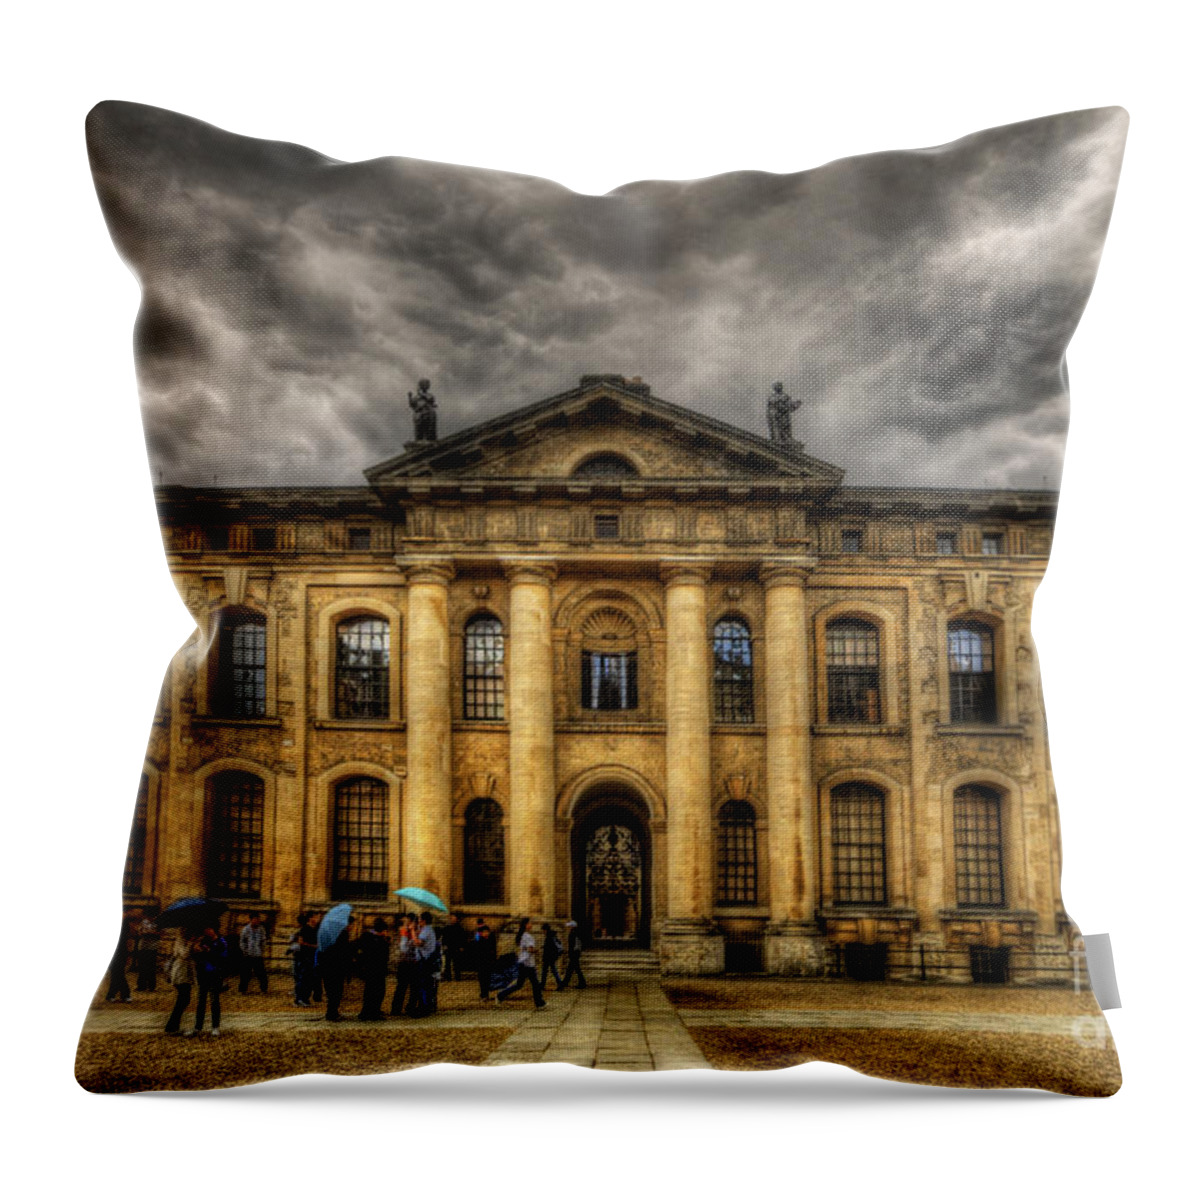 Yhun Suarez Throw Pillow featuring the photograph Clarendon Building - Oxford by Yhun Suarez